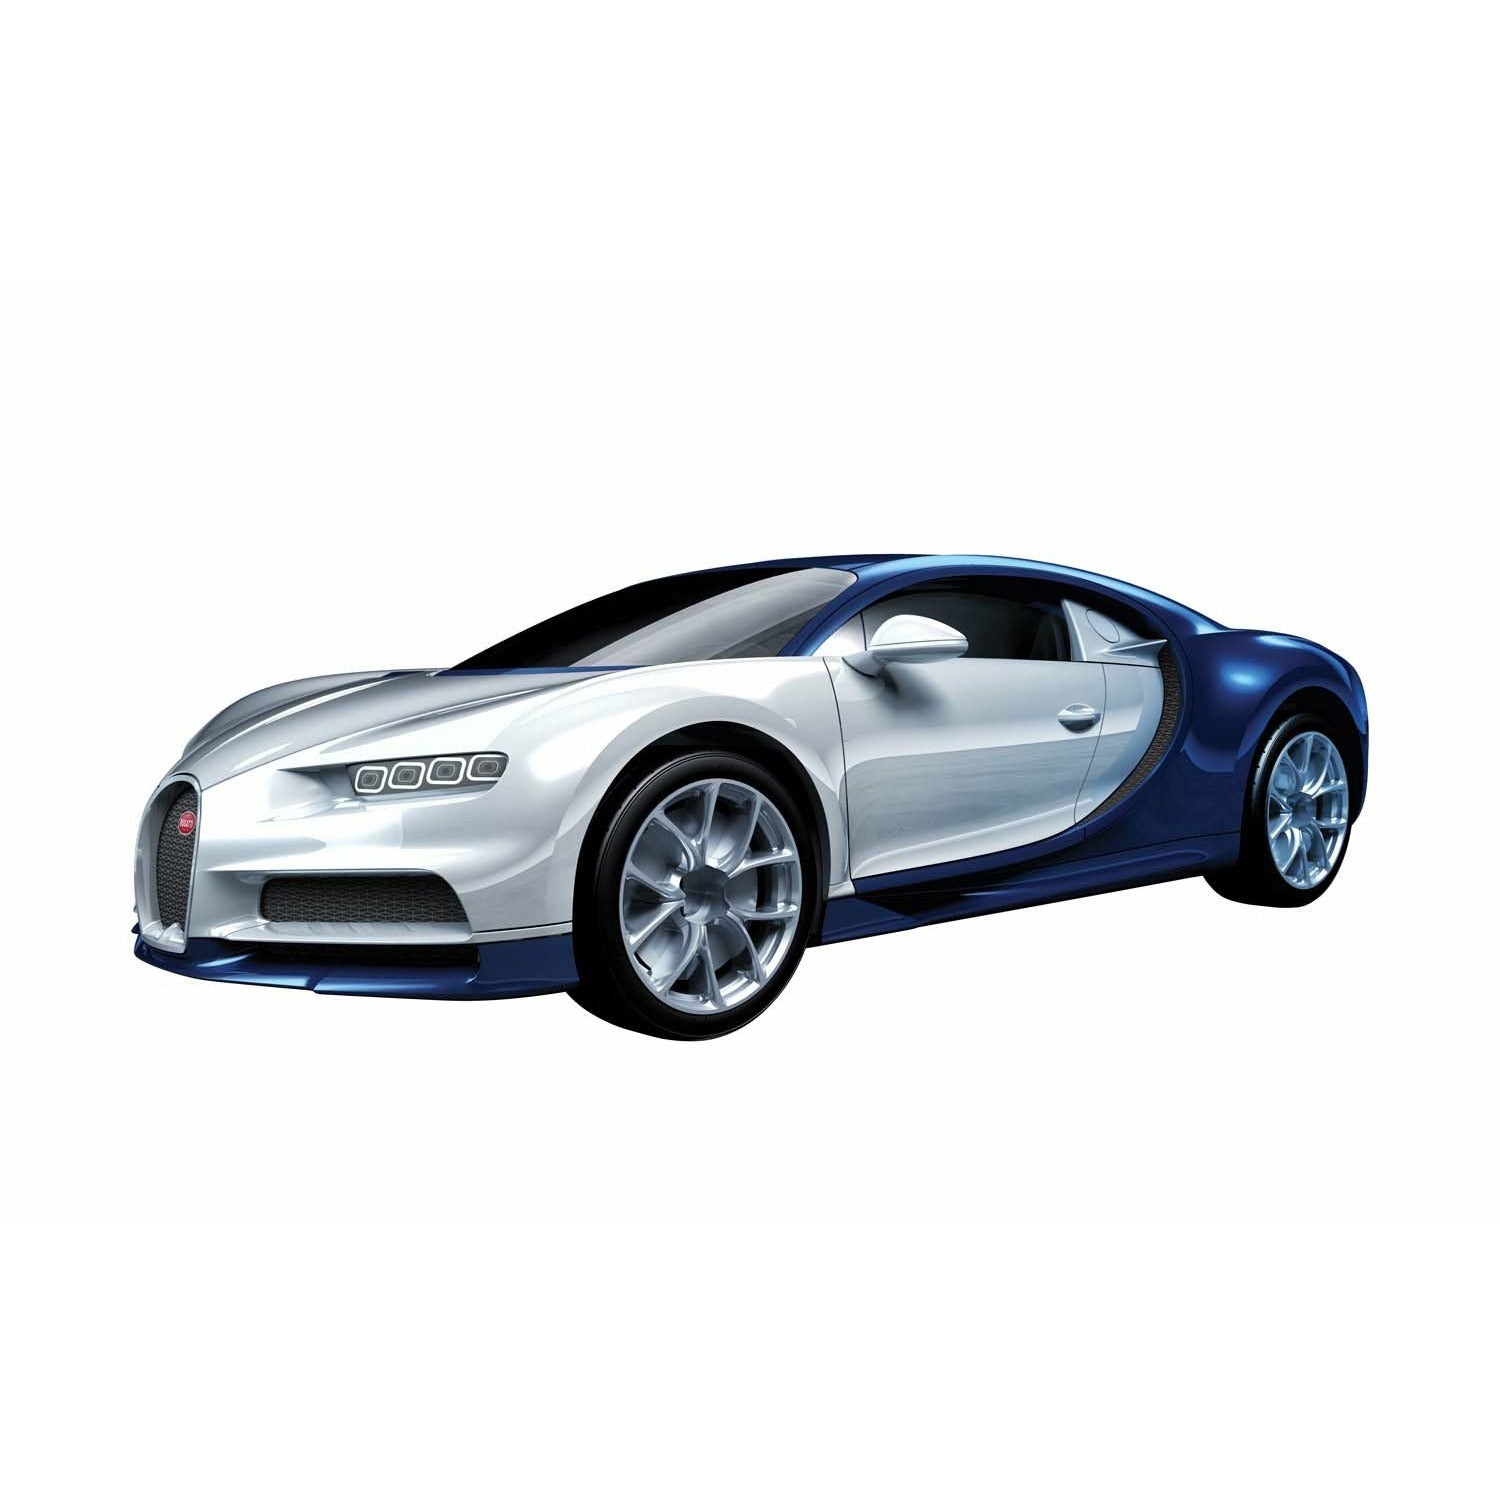 Bugatti Chiron 1/24 Quick Build Car Kit #J6044 by Airfix